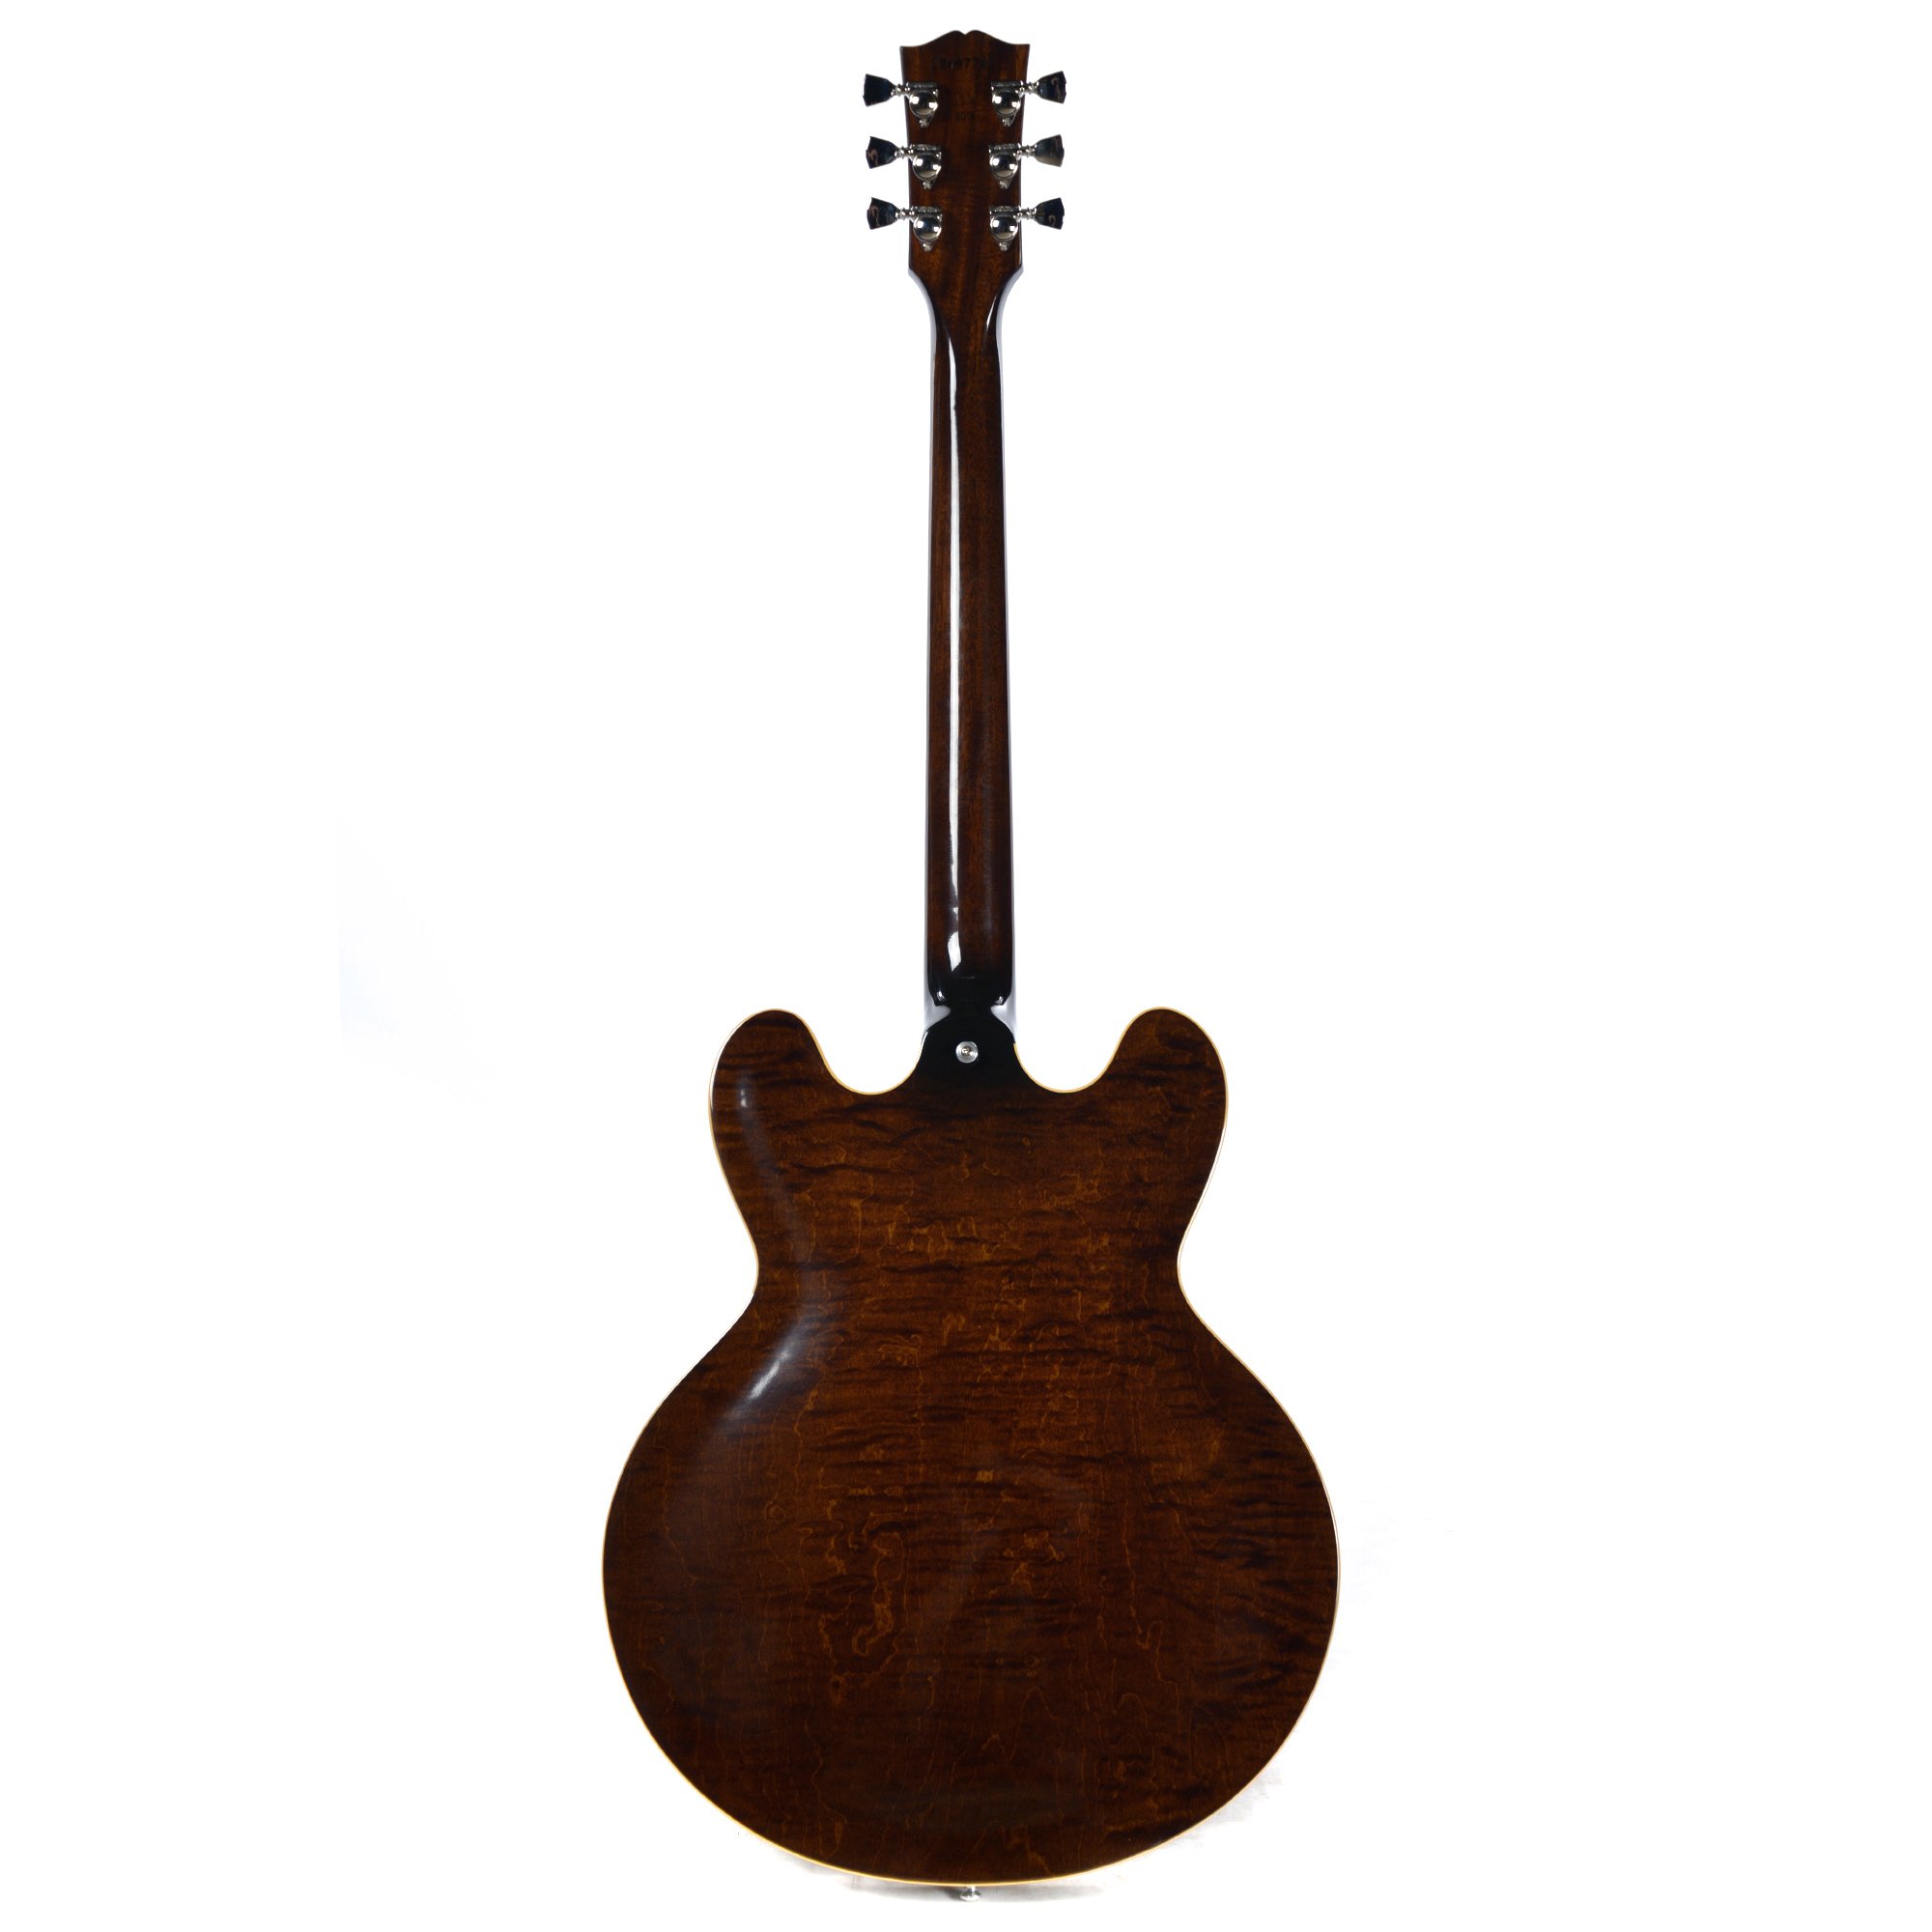 Gibson Es-335 Figured 2018 Ltd - Antique Walnut - Semi-hollow electric guitar - Variation 1